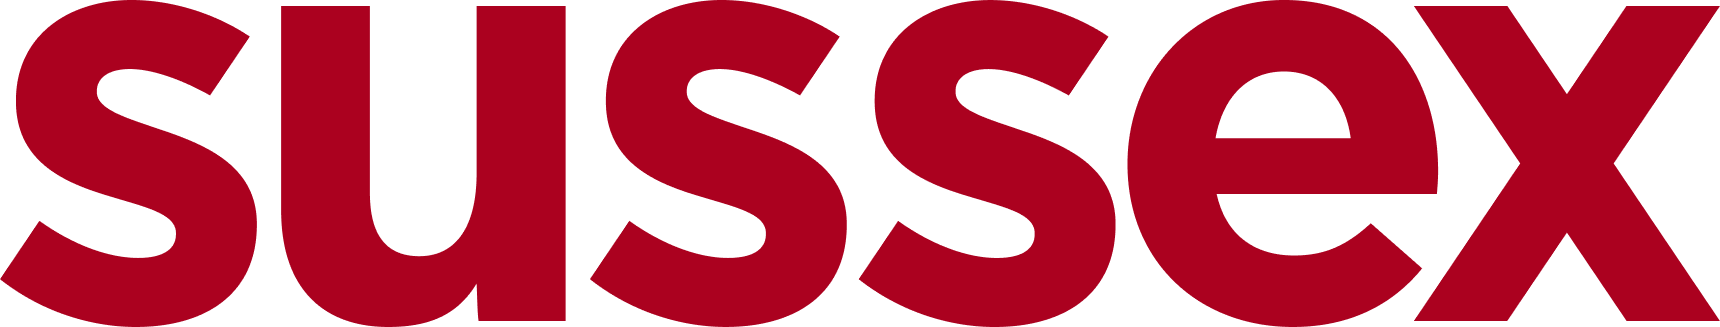 Sussex-Logo.png